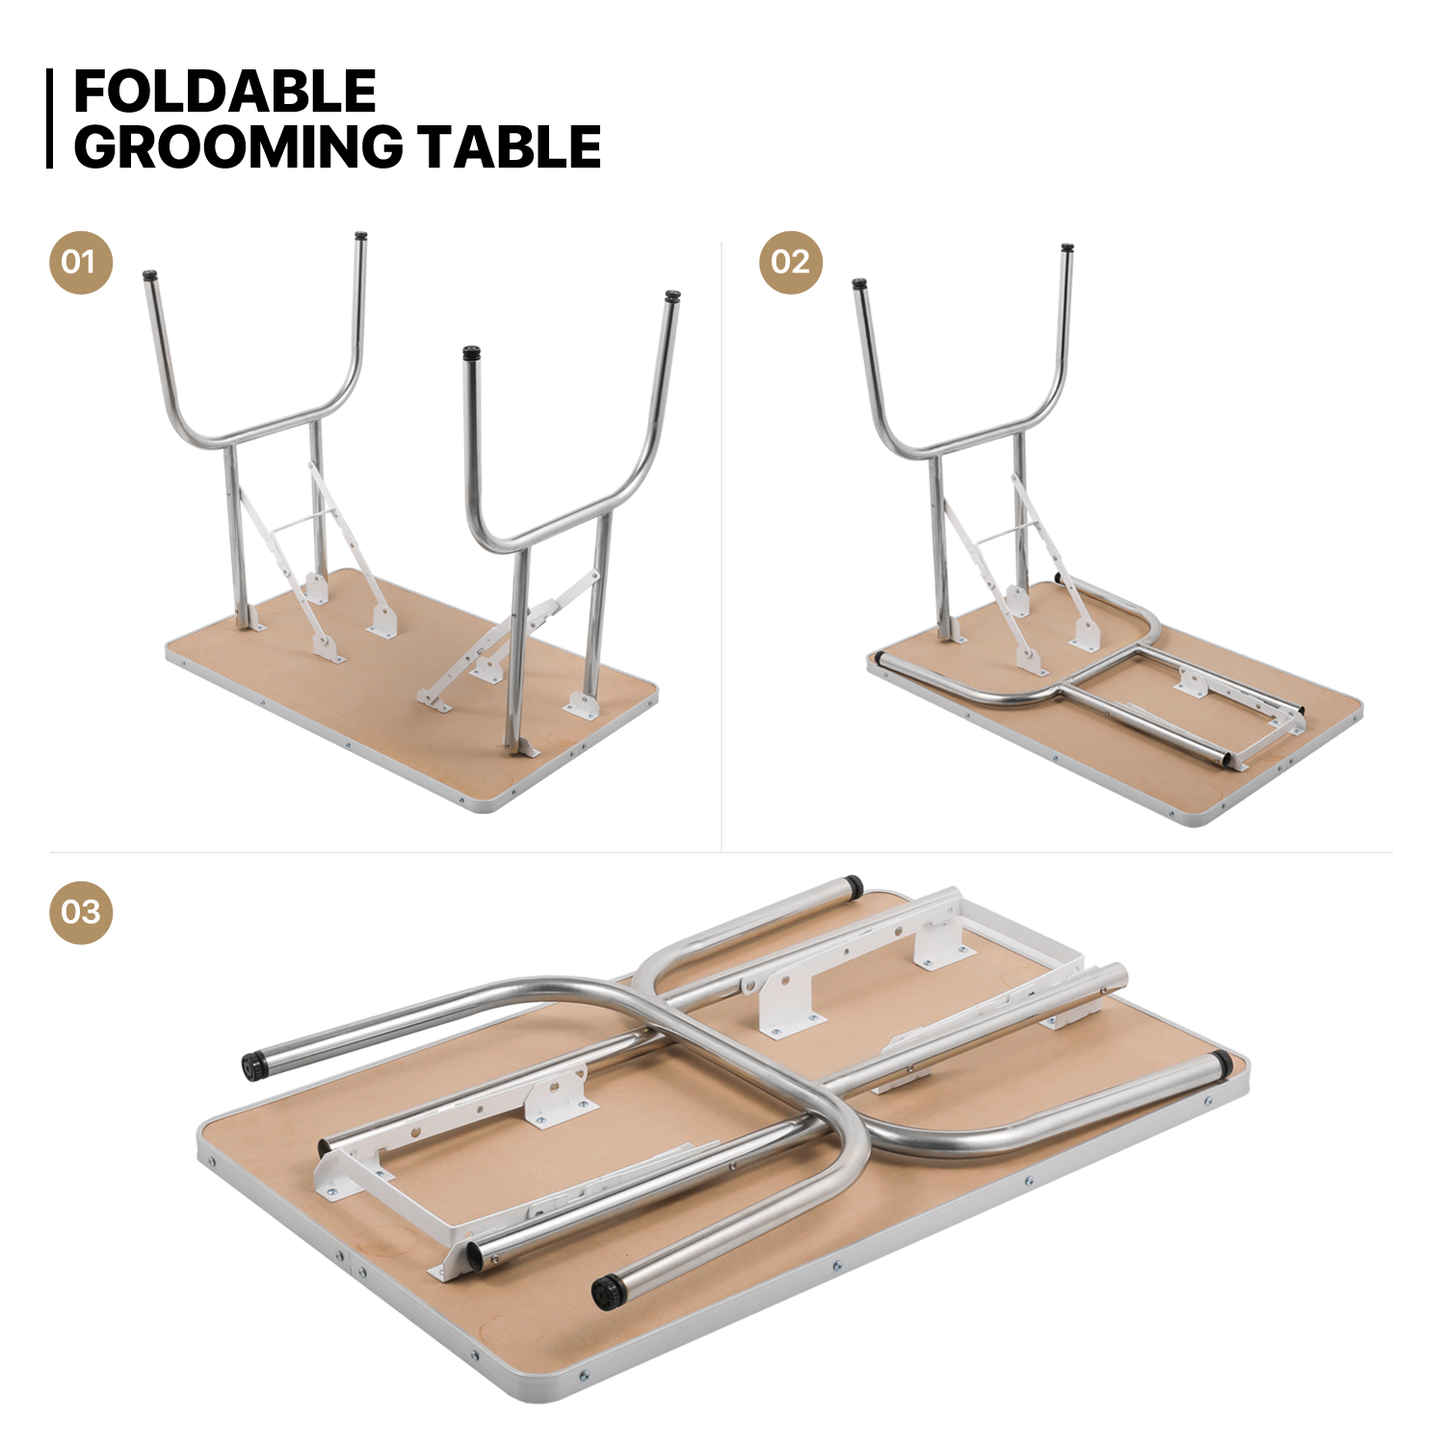 32" Pet Grooming Table w/Adjustable Arm & Noose